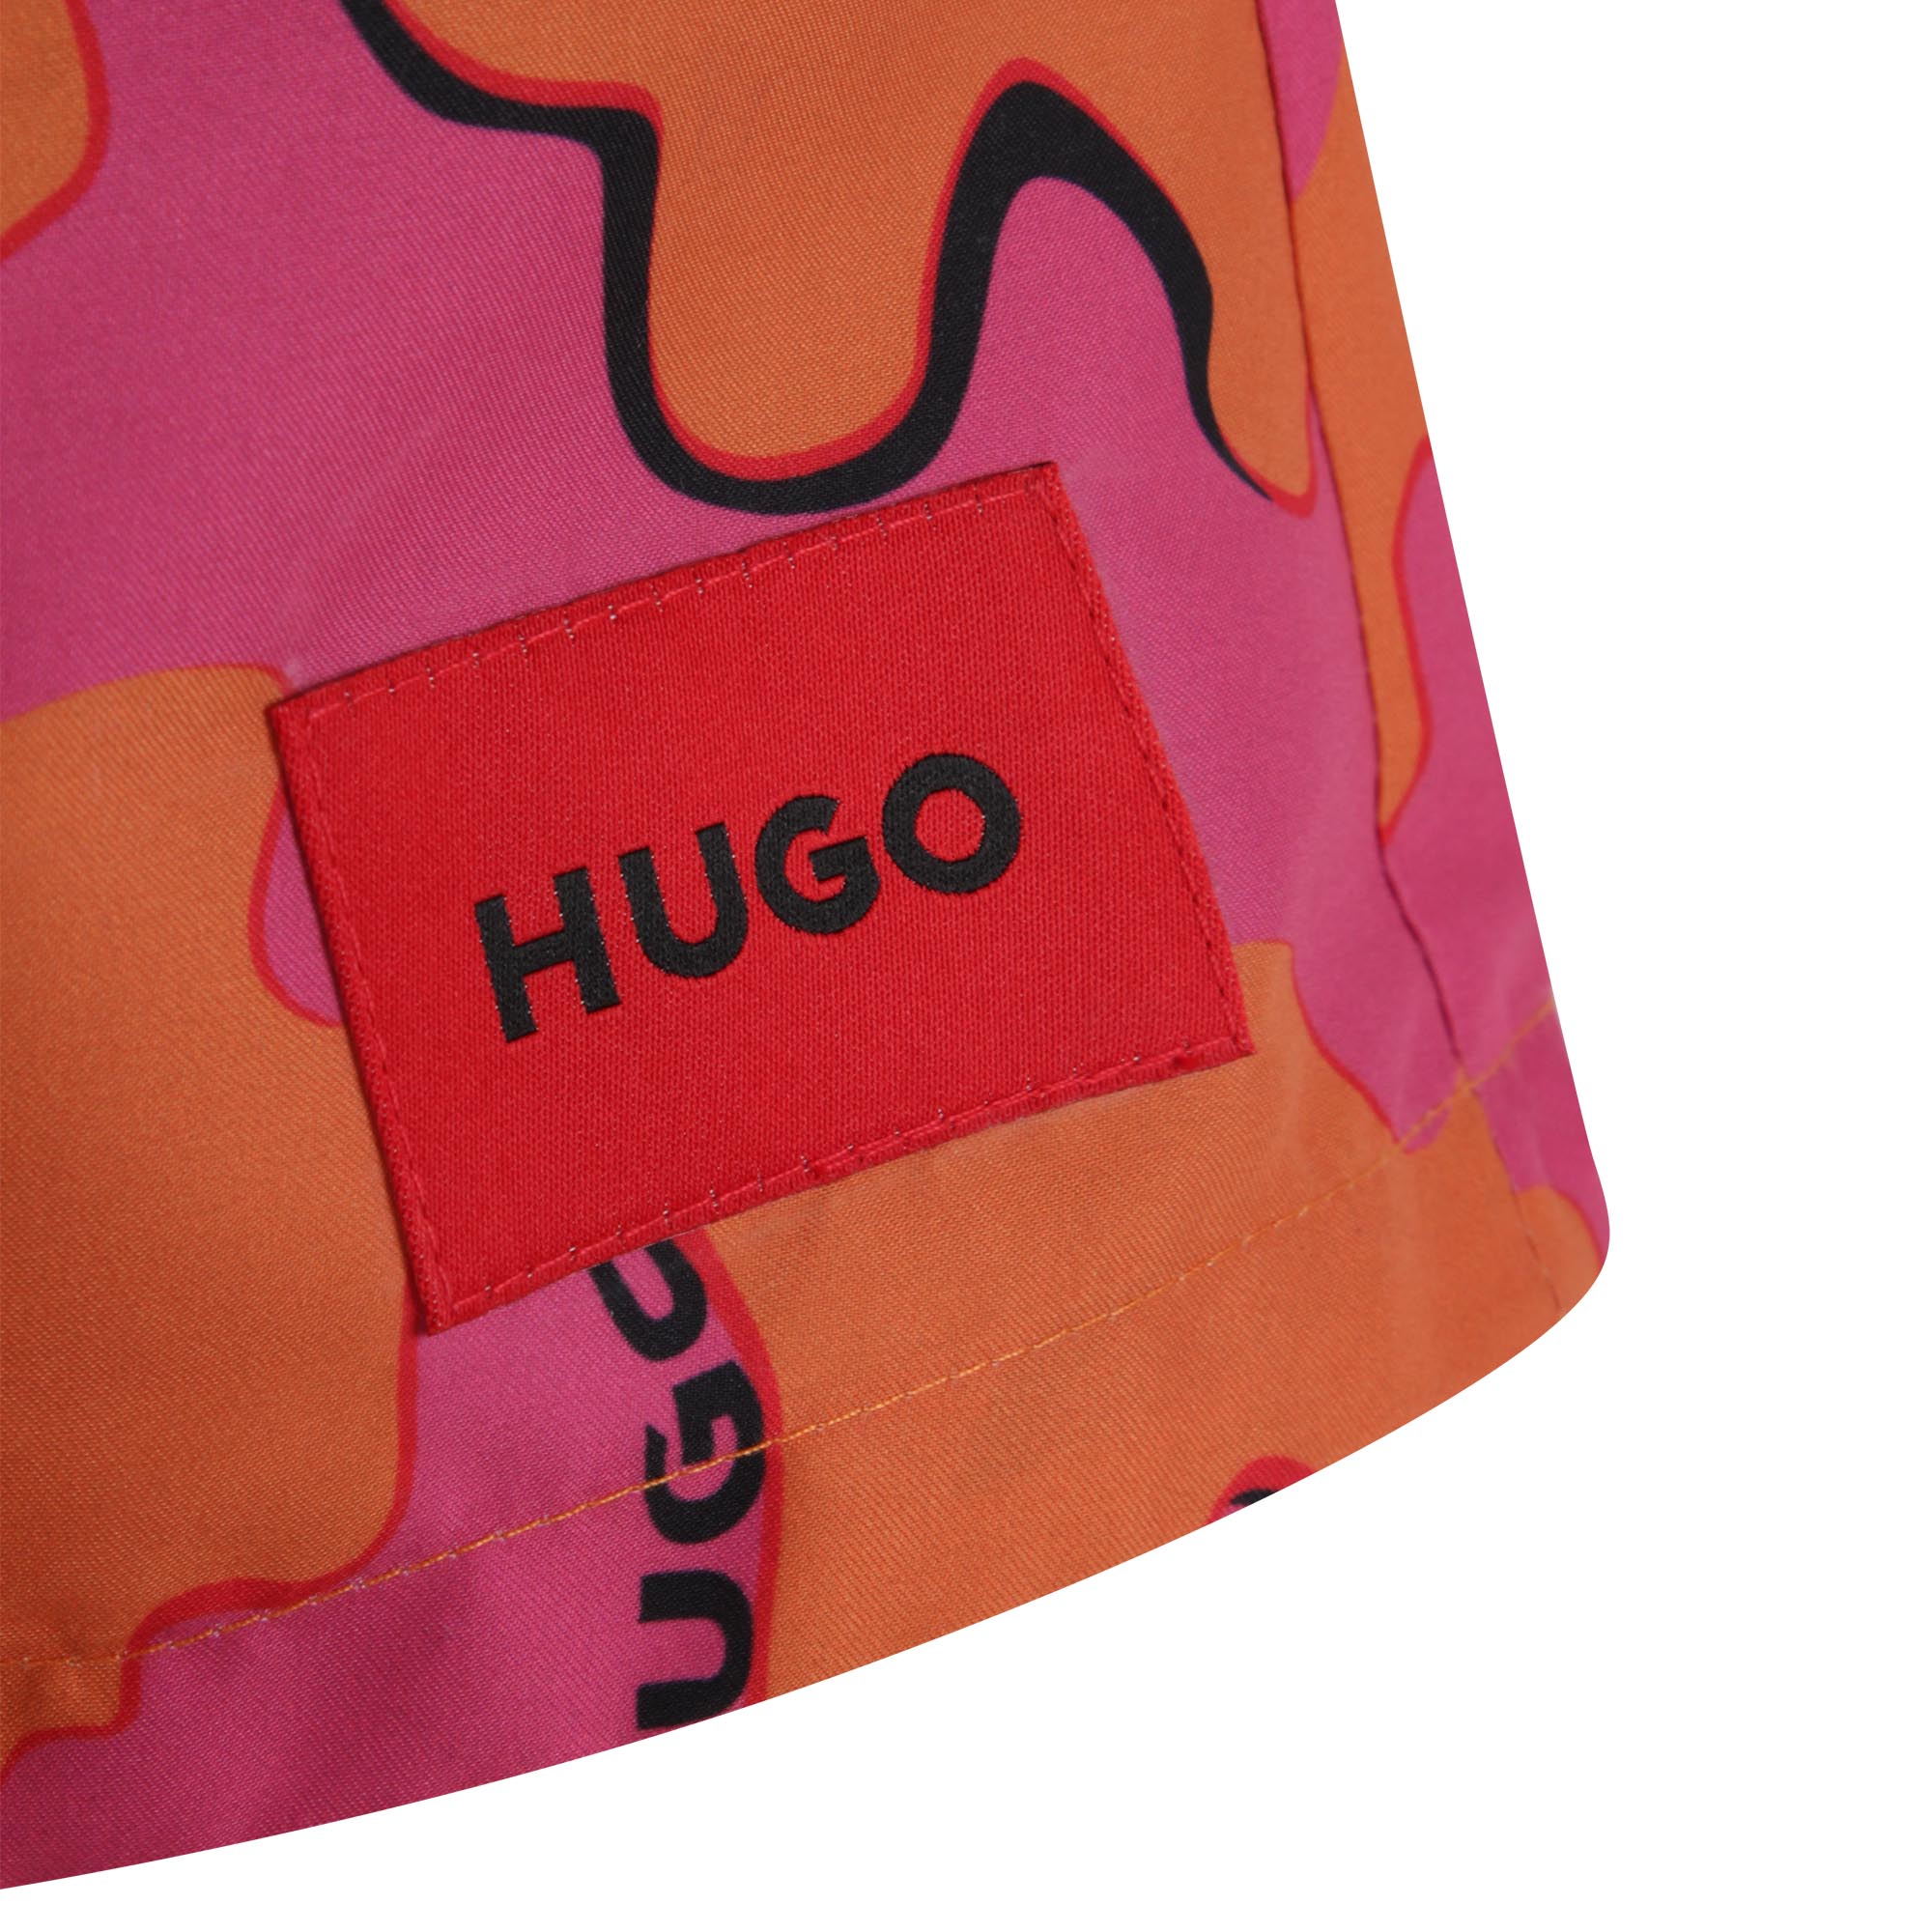 Printed bathing shorts HUGO for BOY